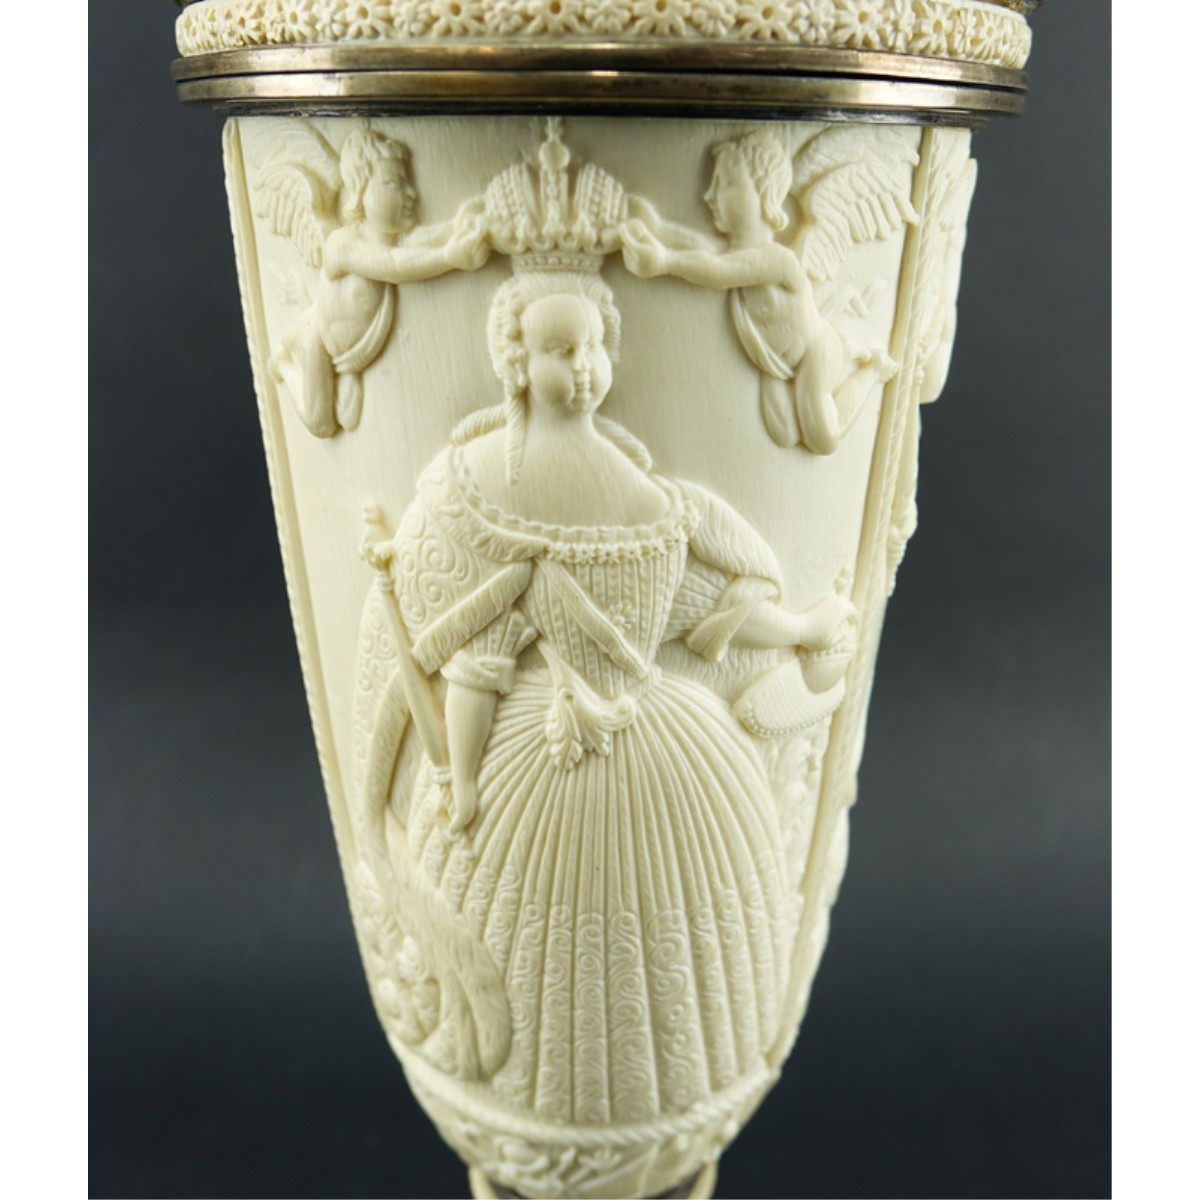 19th Century Russian Figural Vase